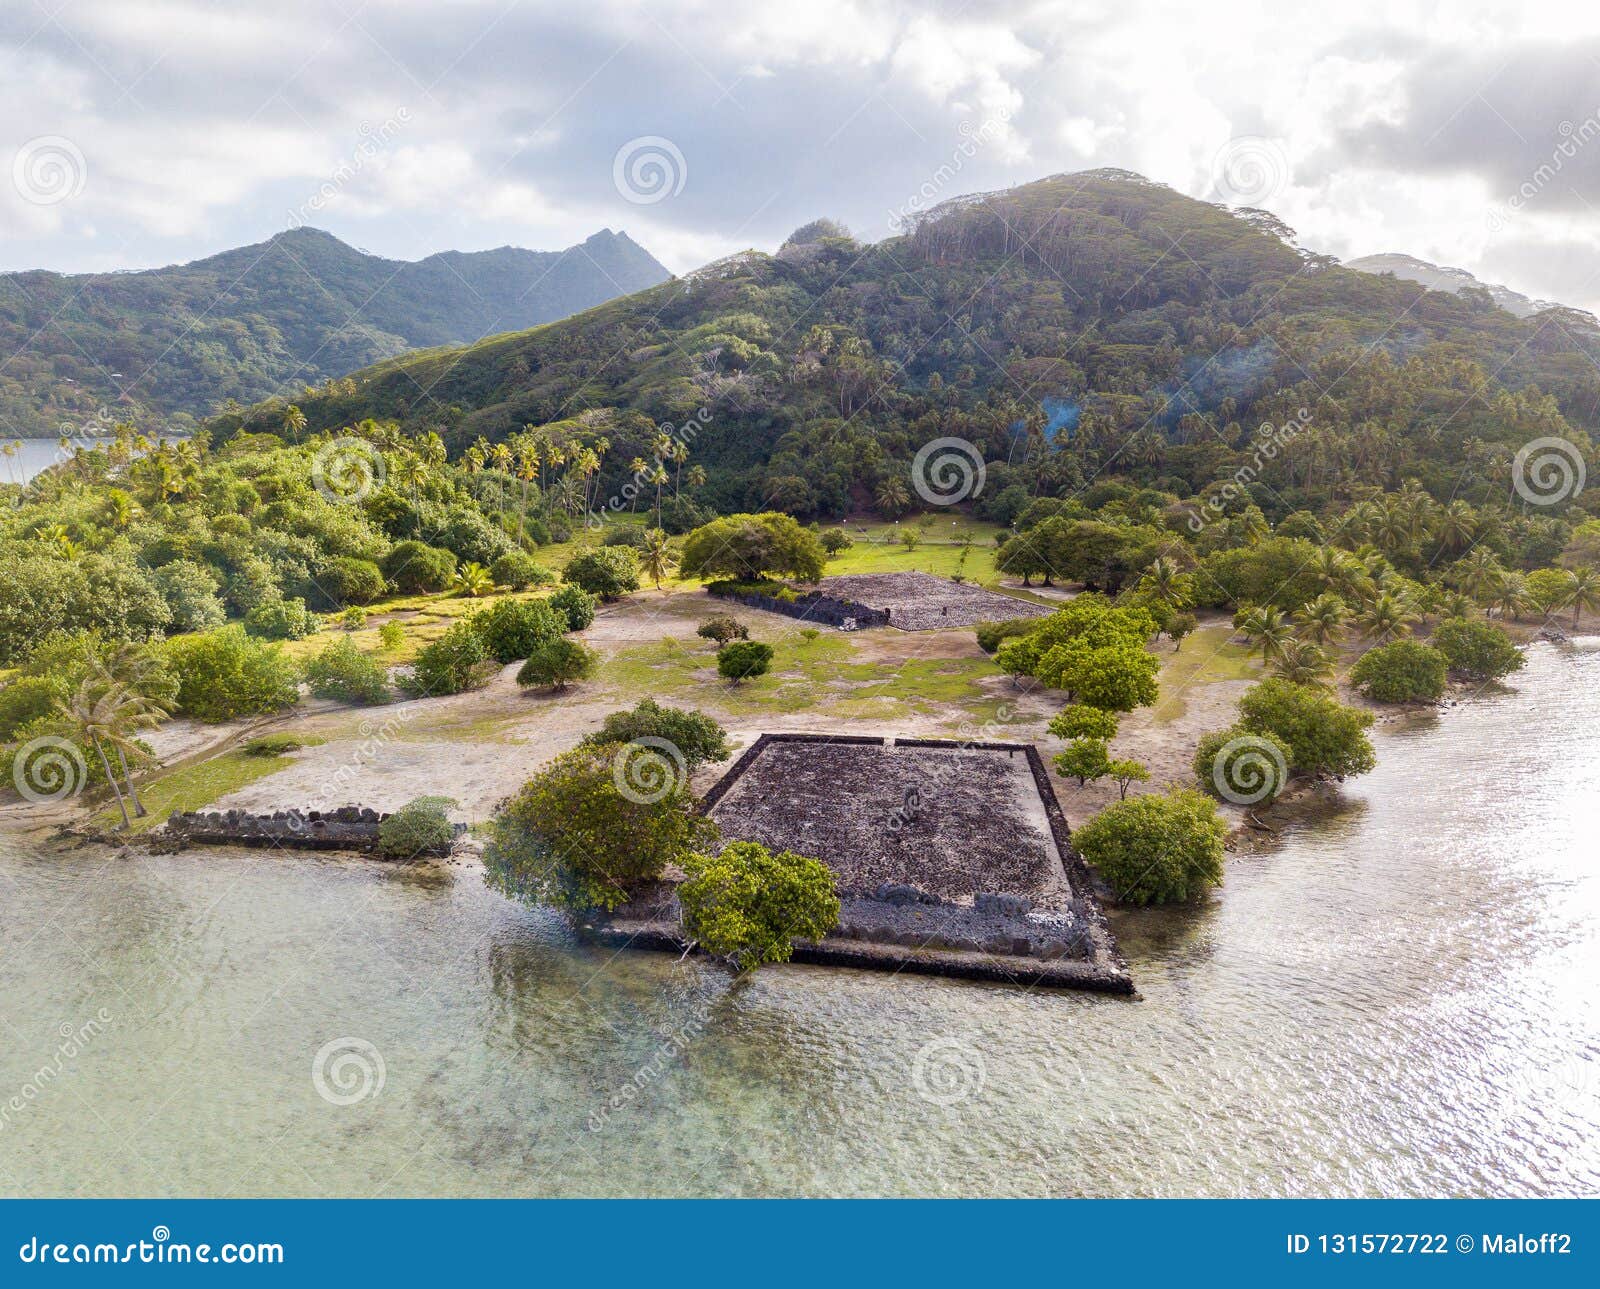 ancient marae taputapuatea temple complex, lagoon shore with mountains background. raiatea island. french polynesia, oceania.